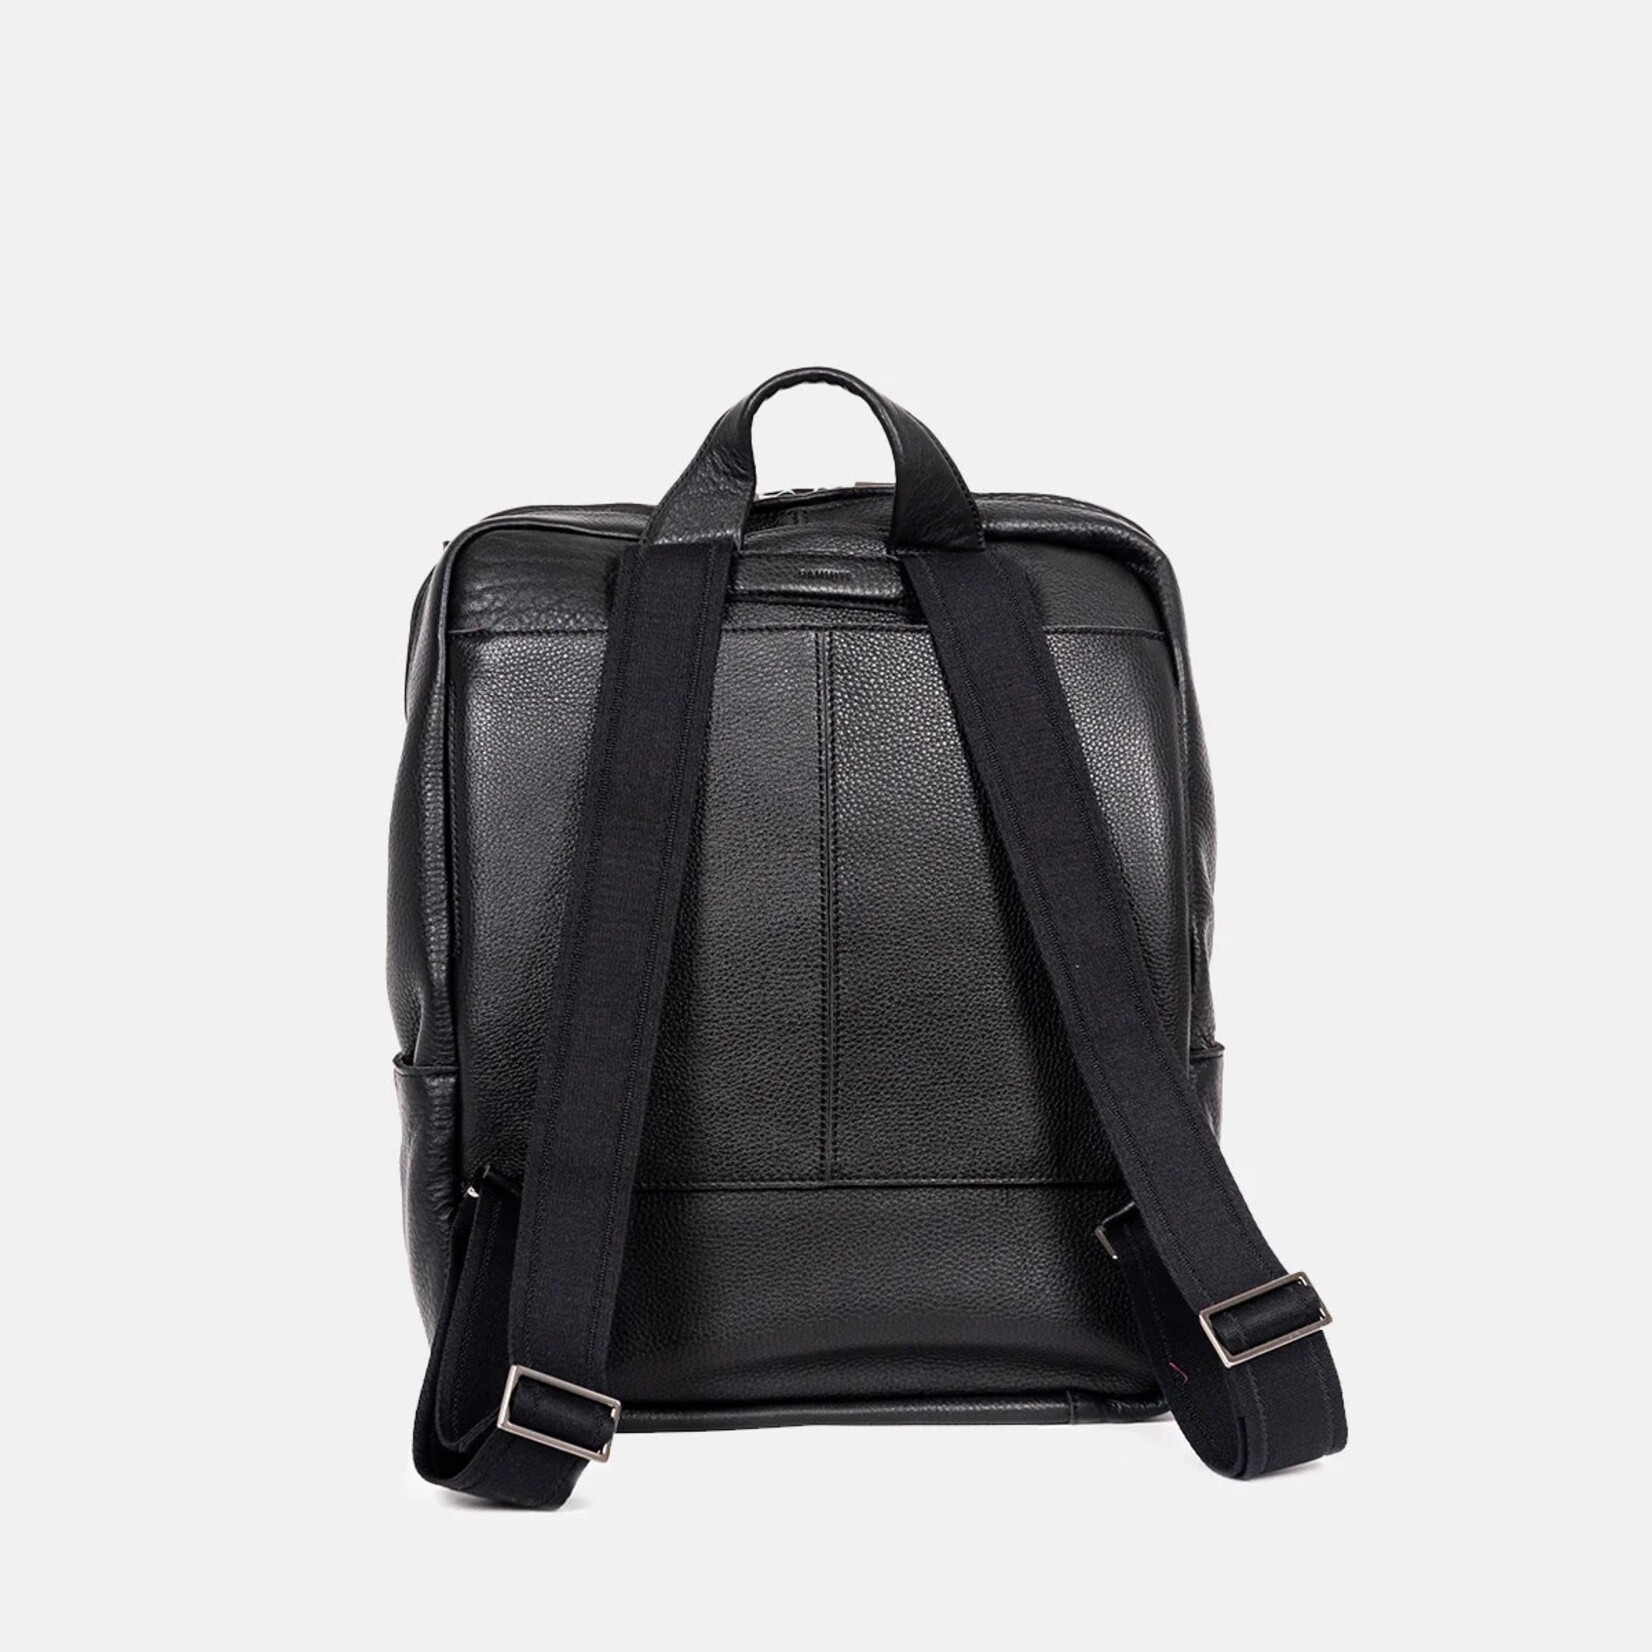 Hammitt Montana Backpack XL - Black